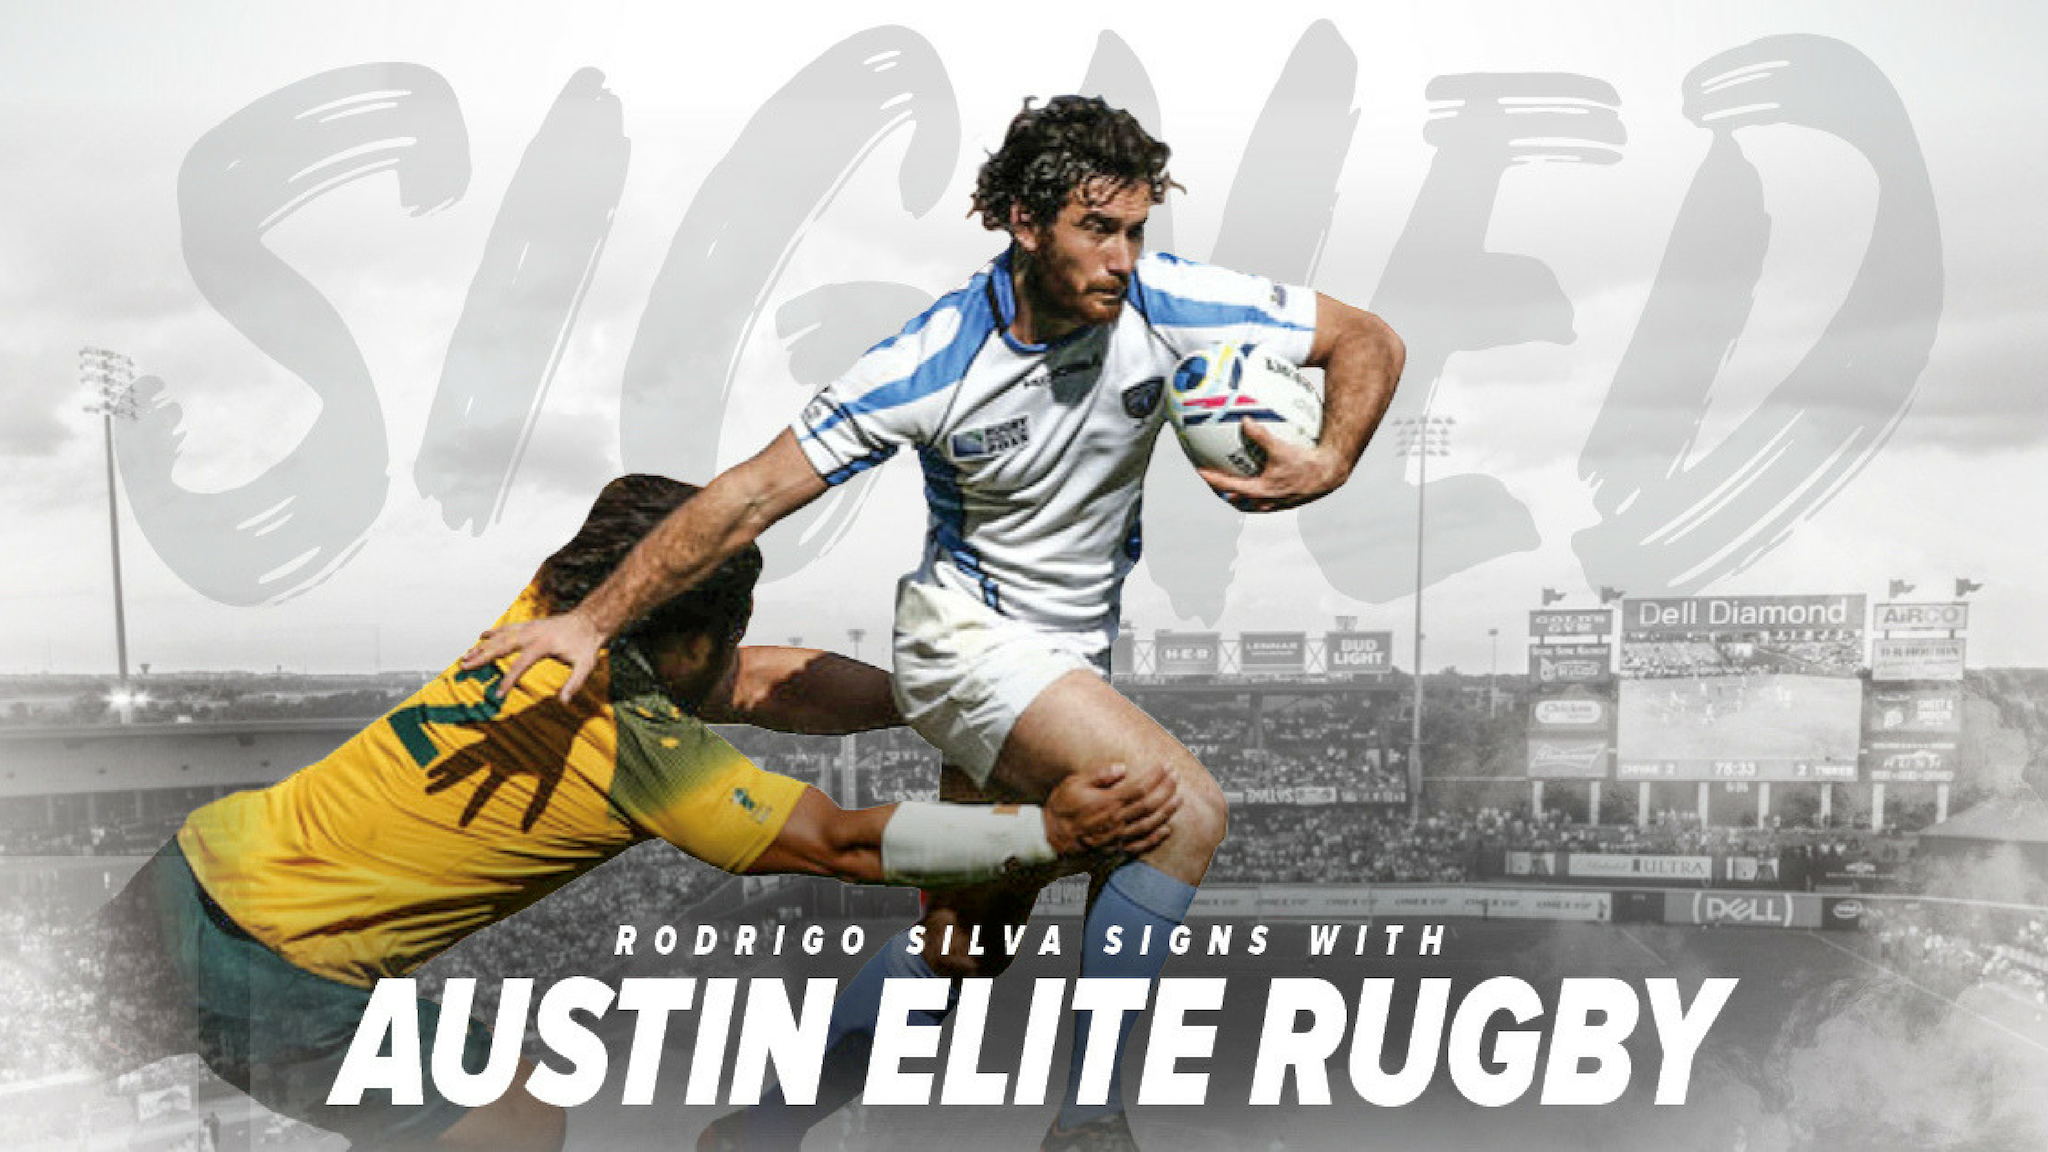 Uruguayan International, Rodrigo Silva signs with Austin Elite Rugby